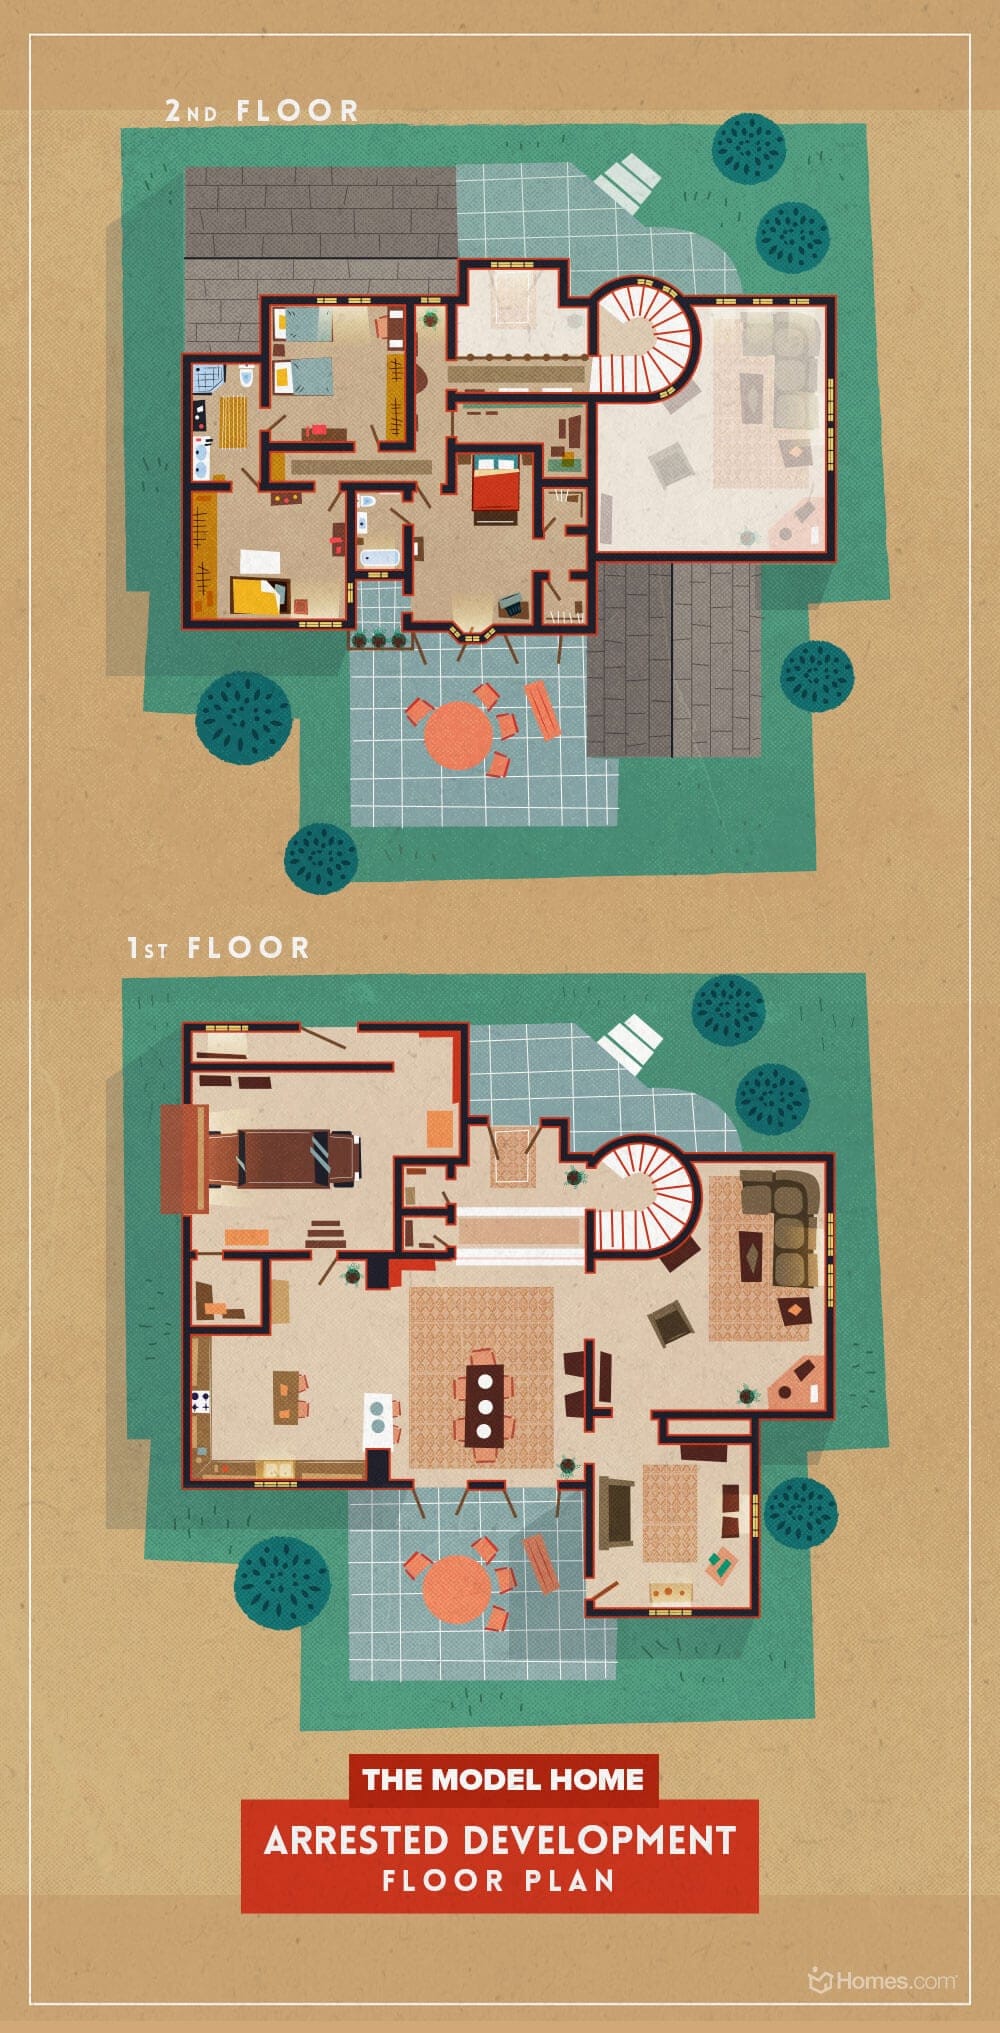 home-floor-plans-illustrations-1